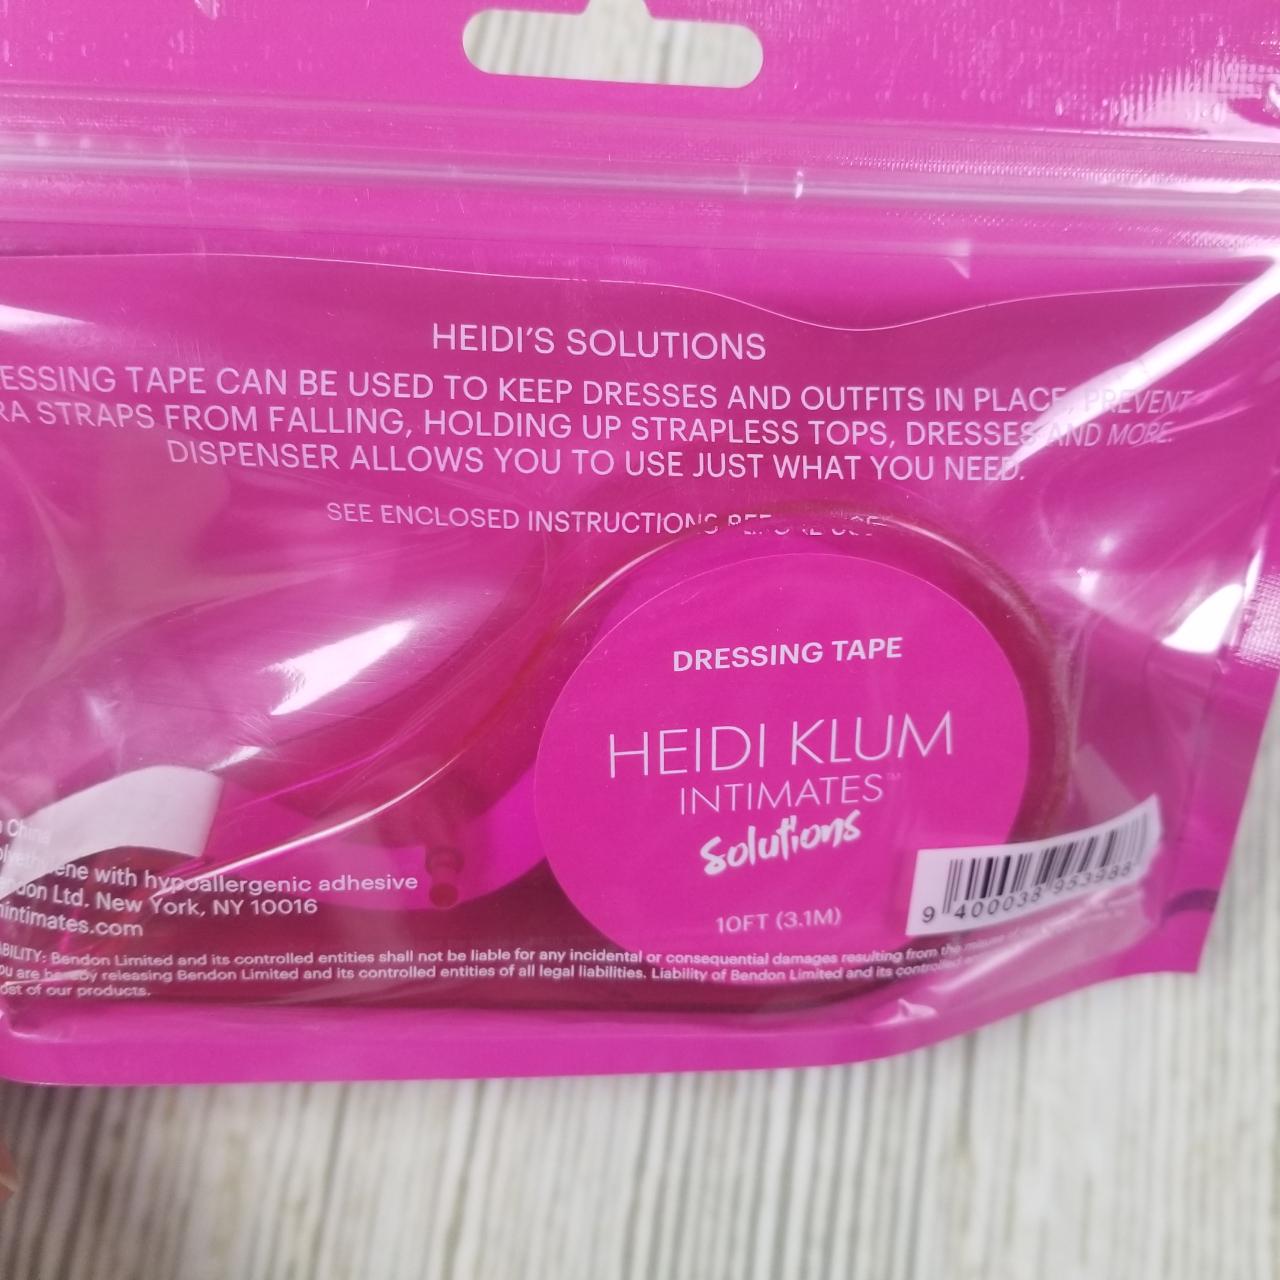 Product Image 4 - New in bag HEIDI KLUM